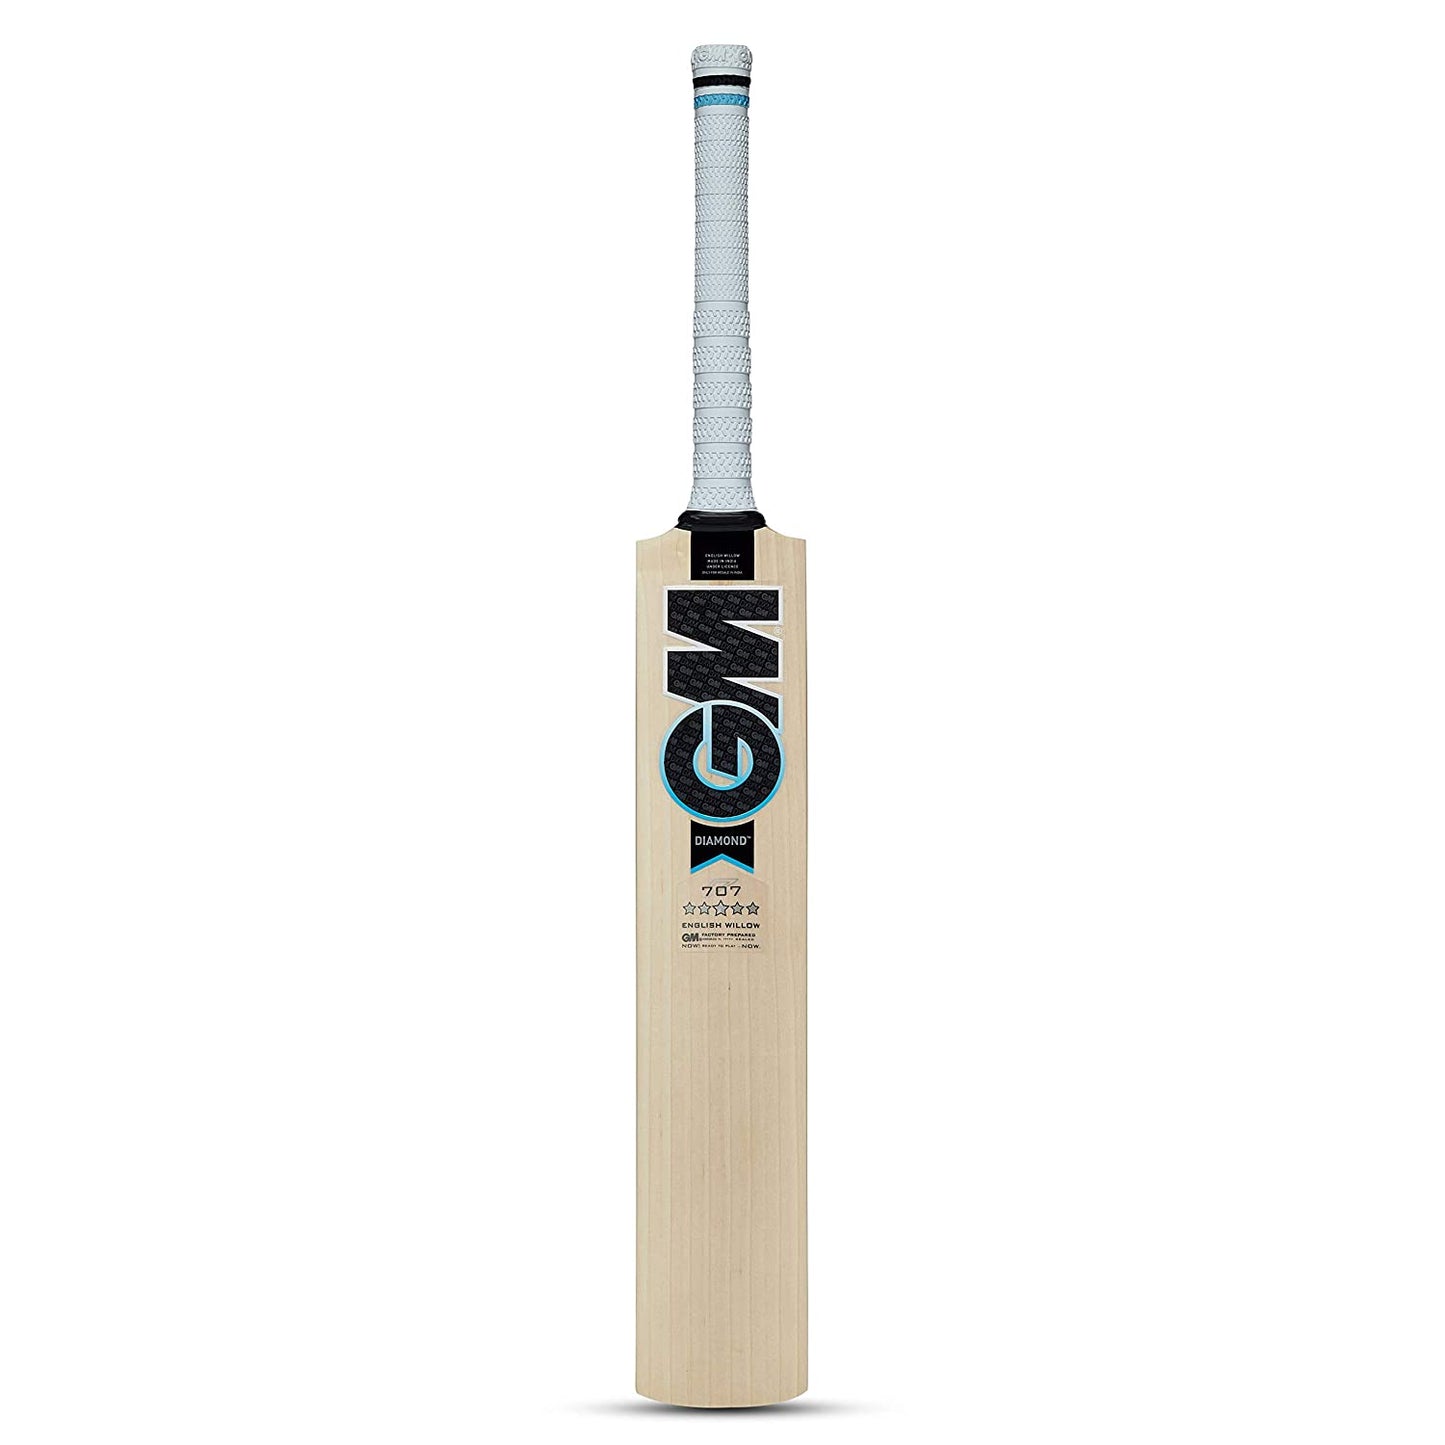 GM Diamond 707 English Willow Cricket Bat - Best Price online Prokicksports.com